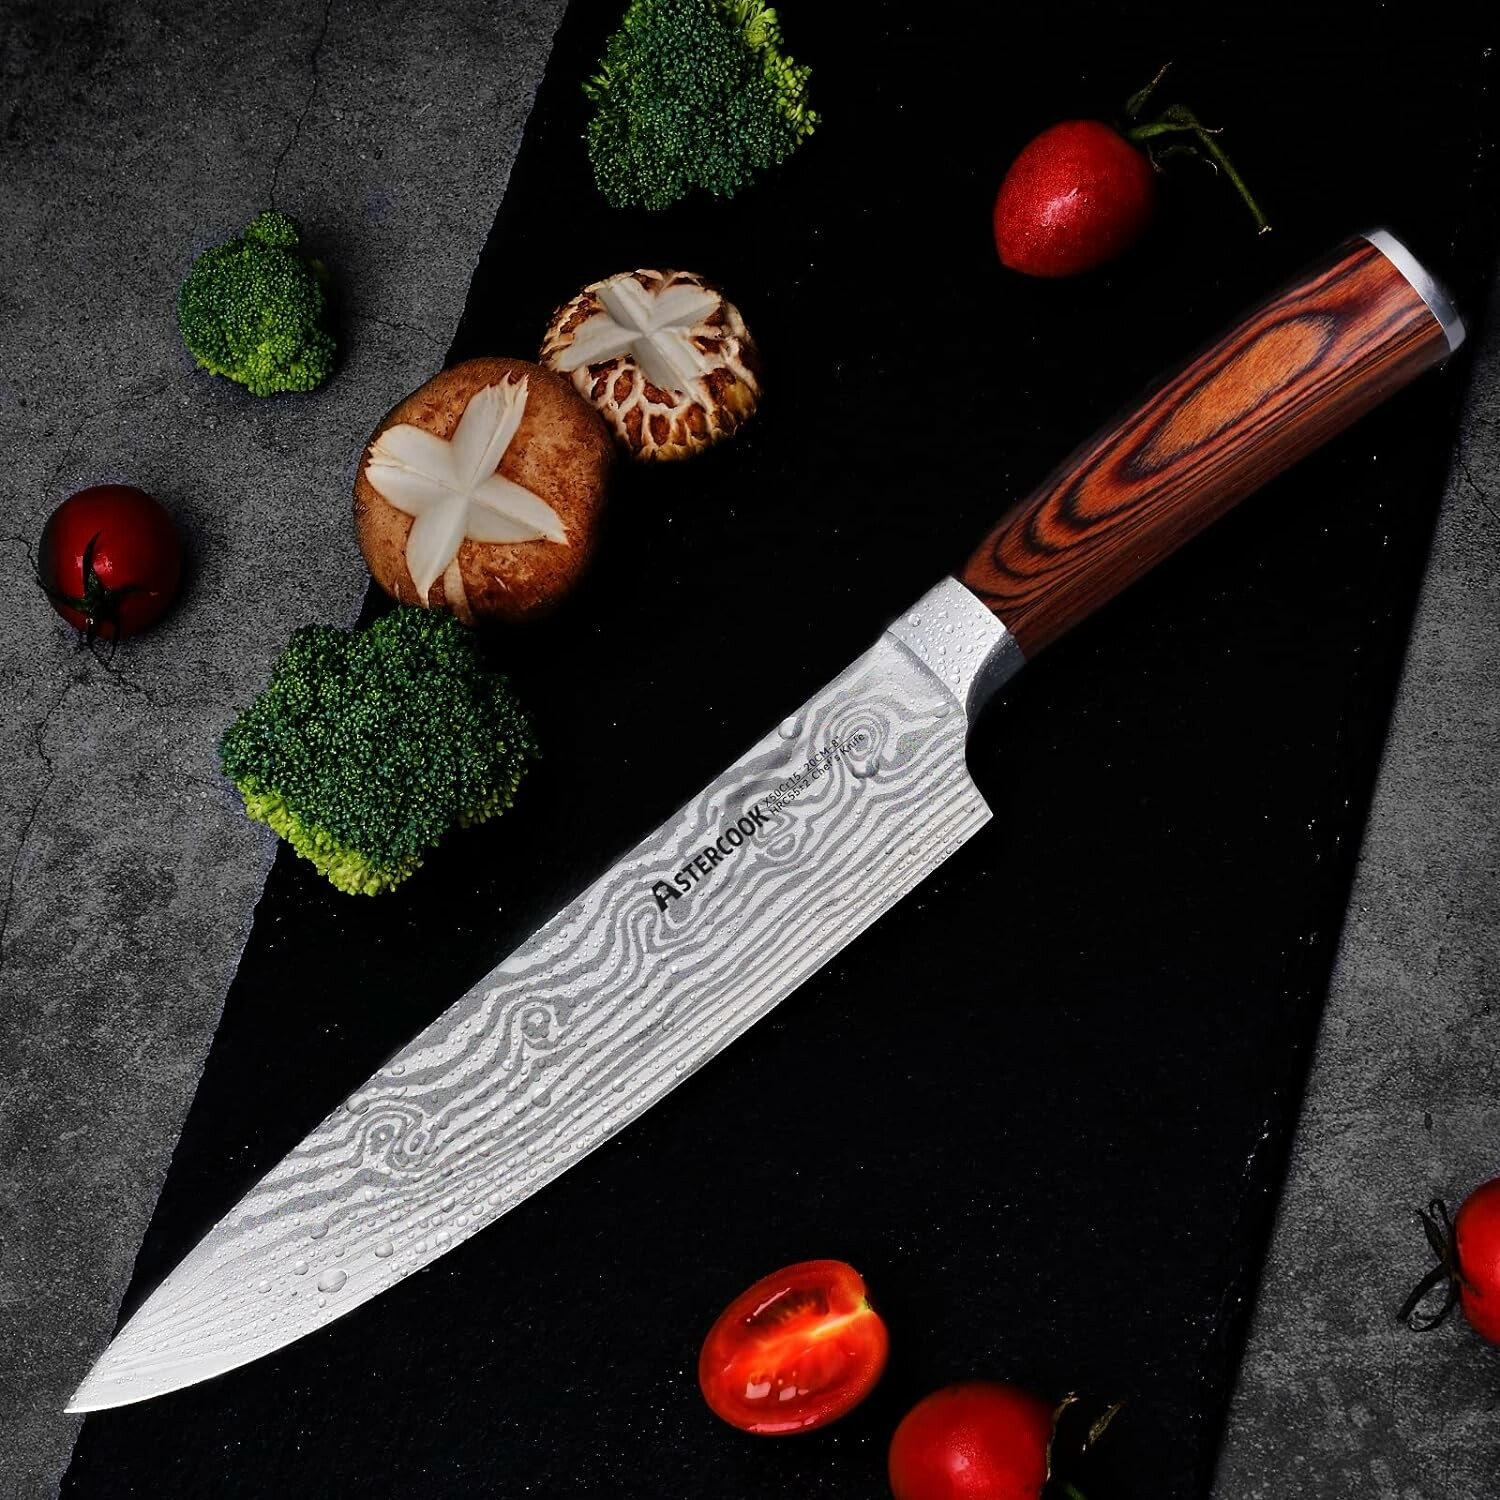  Astercook Knife Set, Kitchen Knife Set